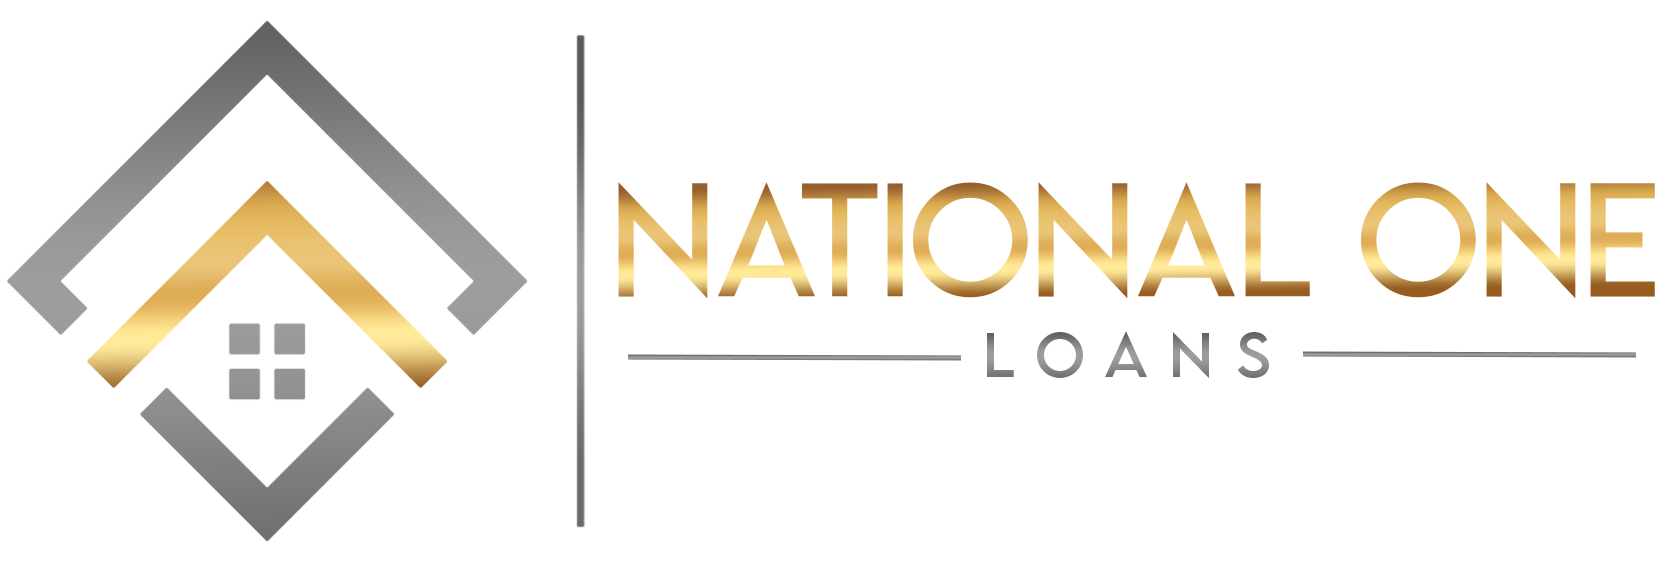 National One Loans, Inc.